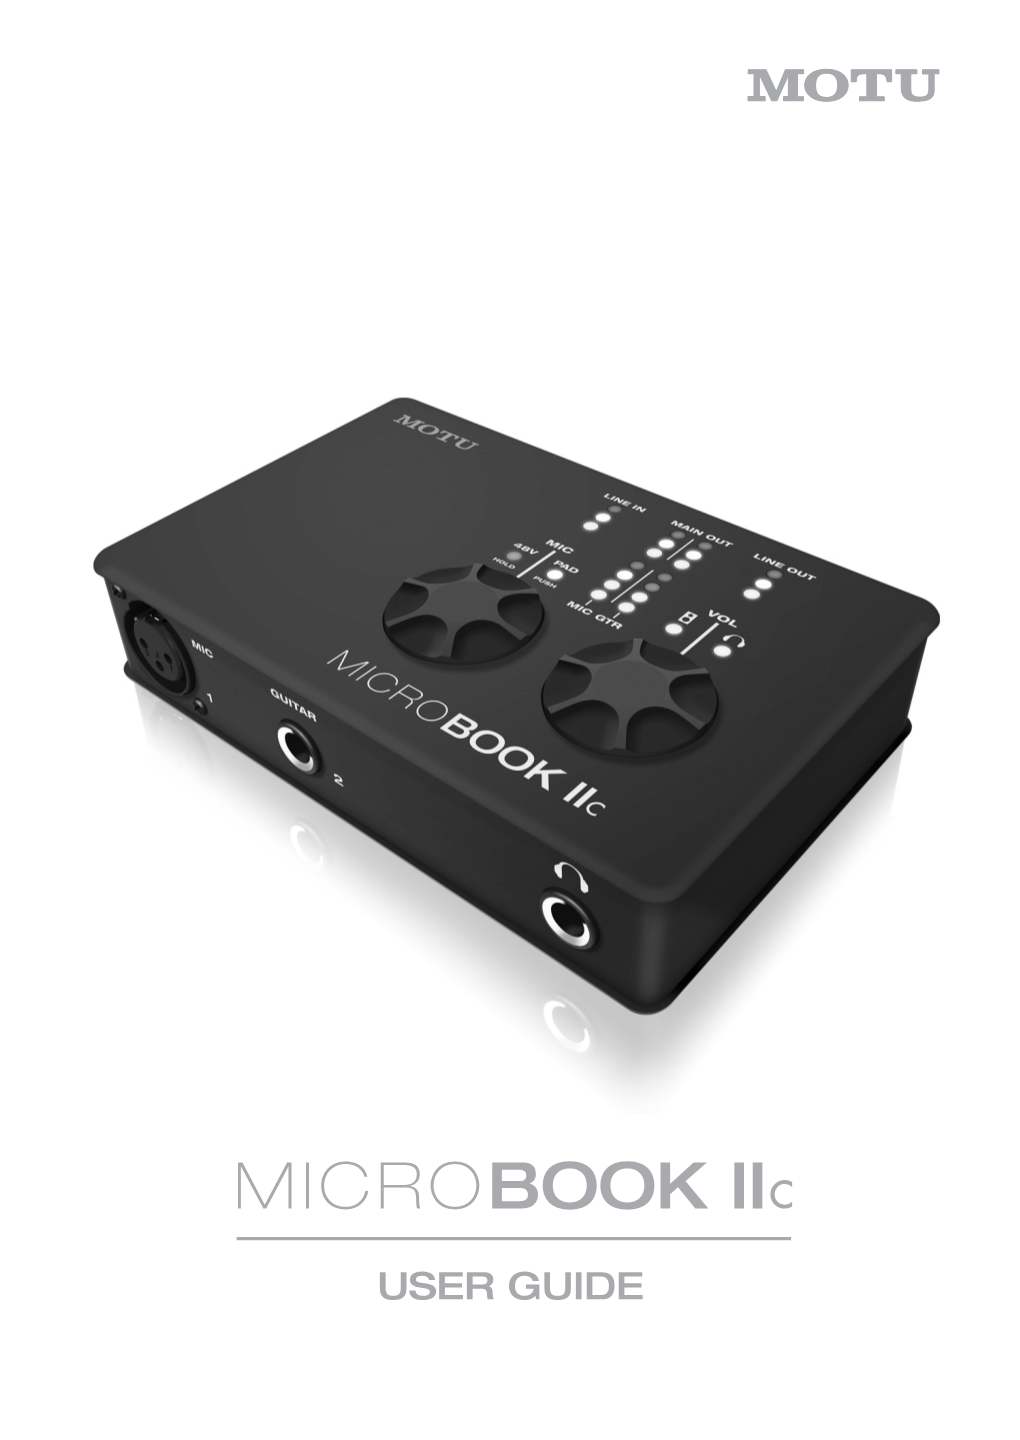 Motu Microbook Iic Manual